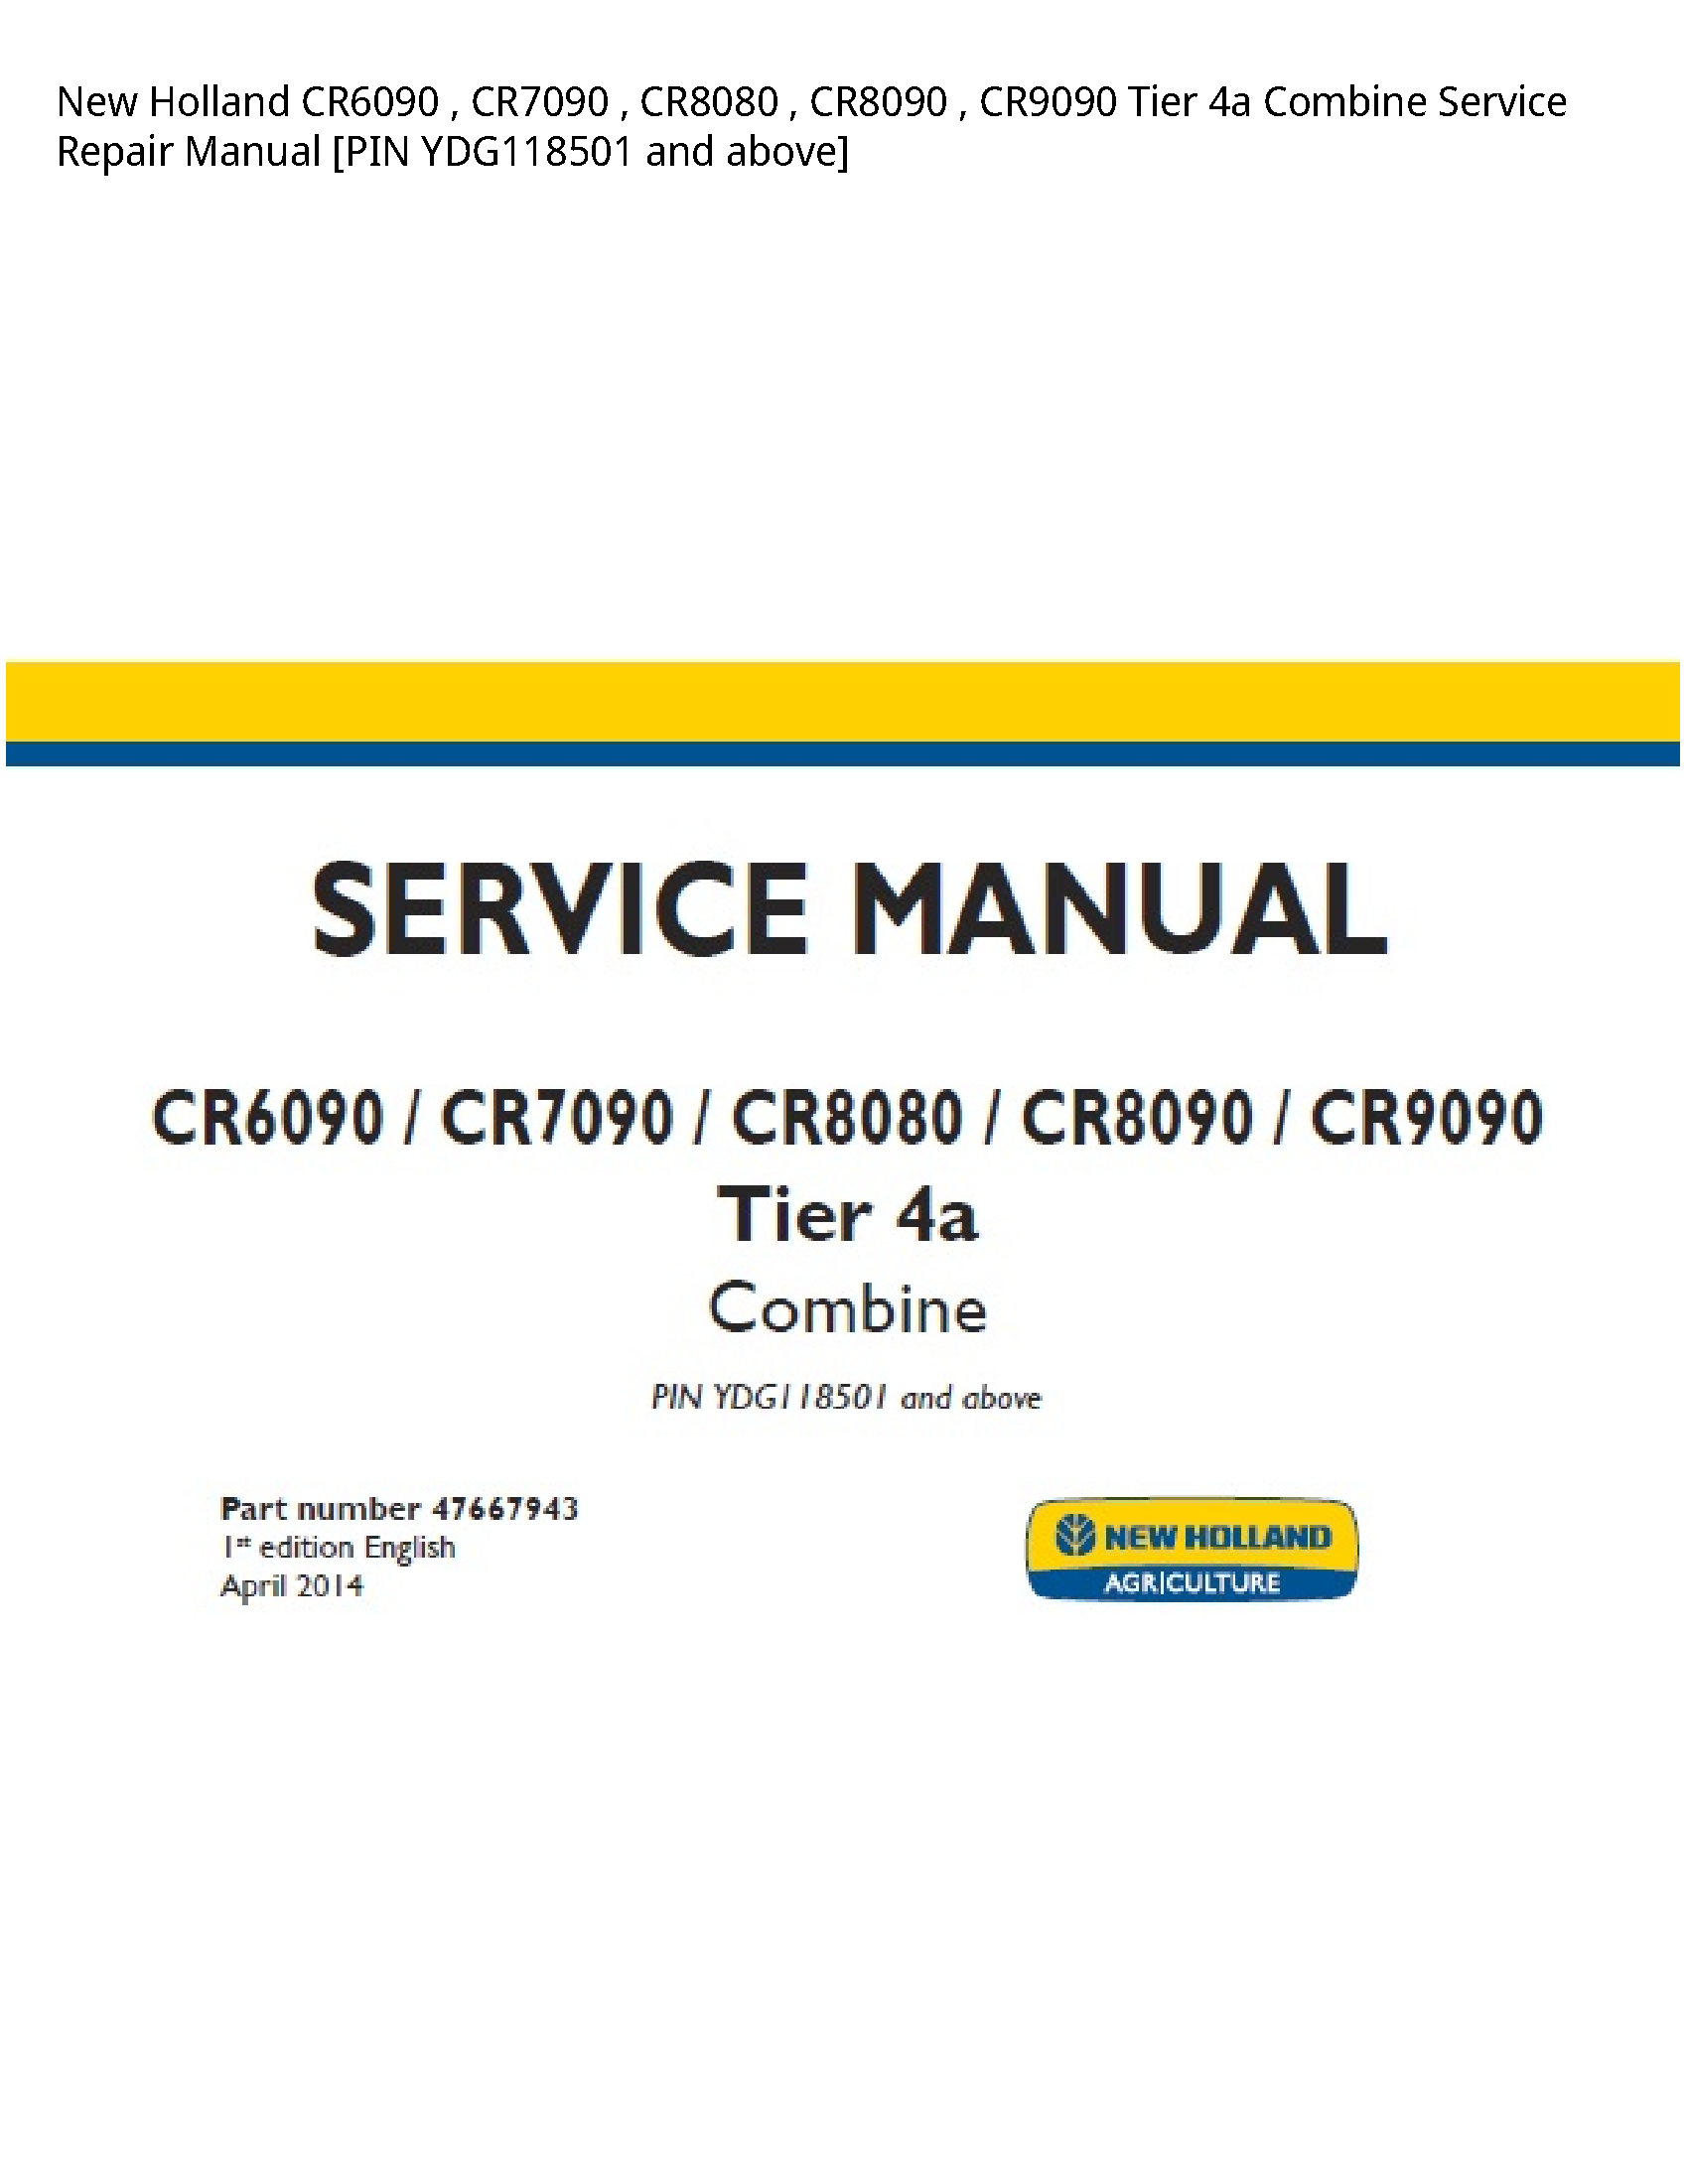 New Holland CR6090 Tier Combine manual